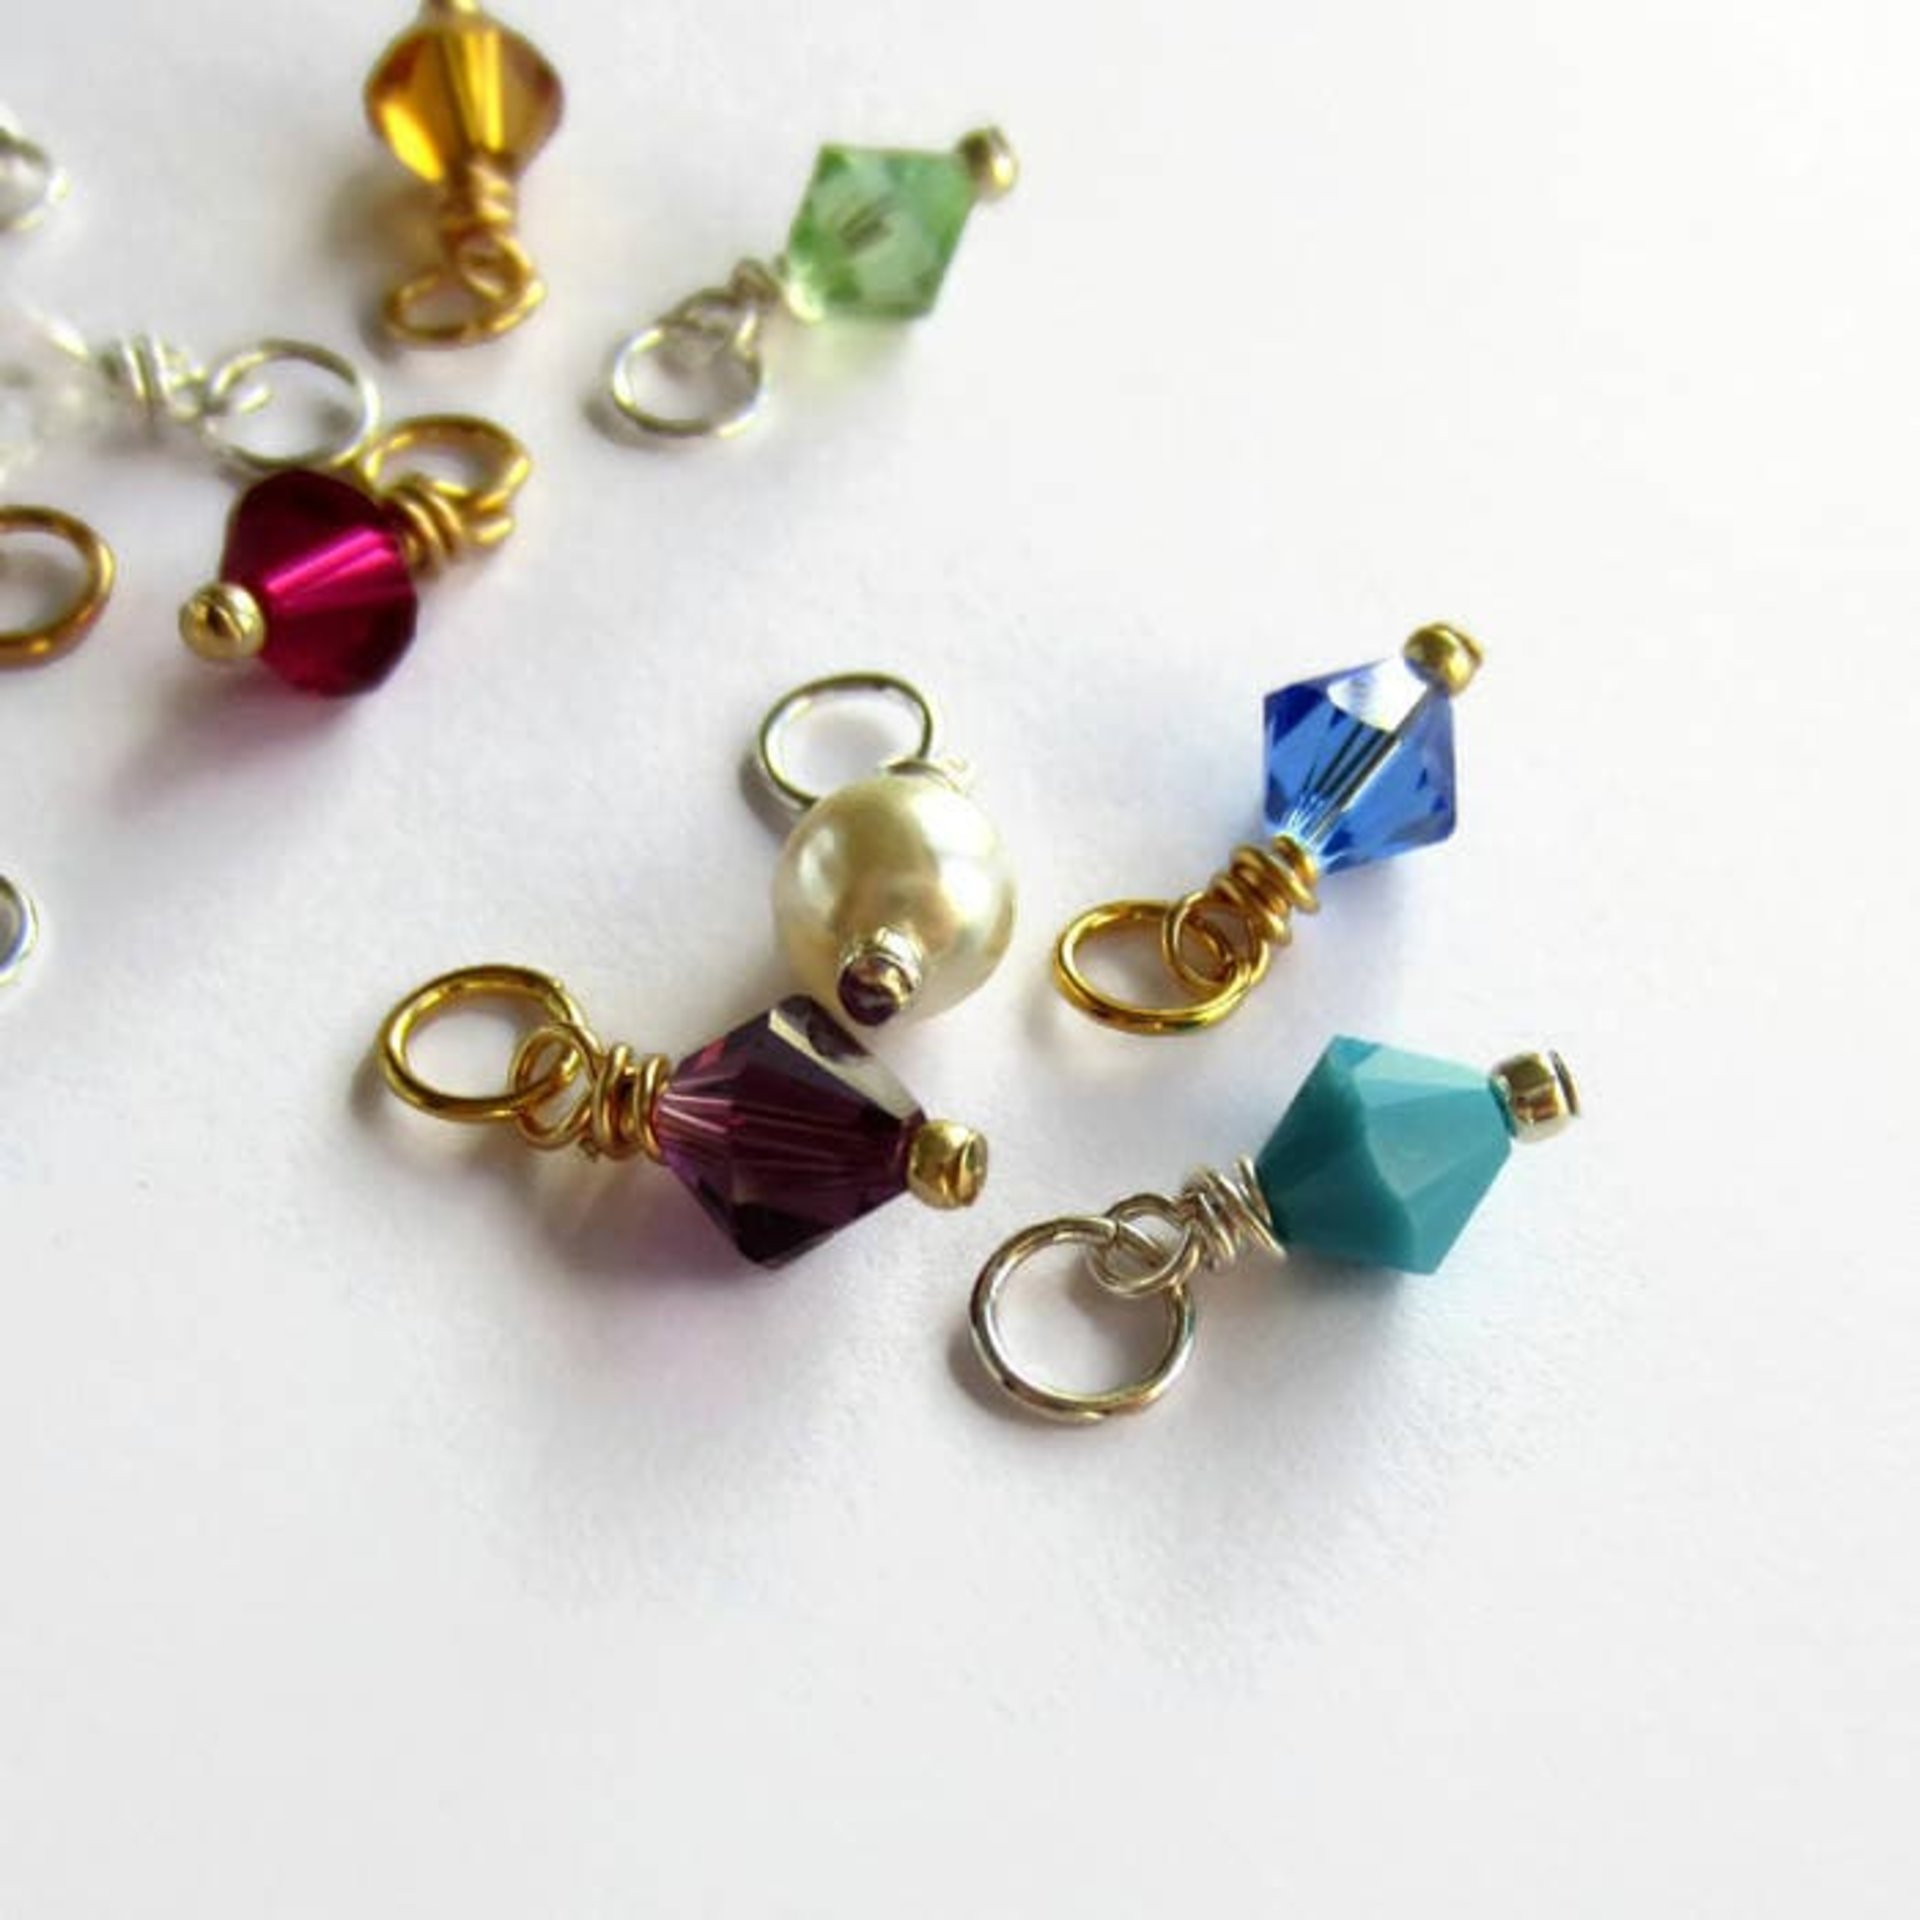 Small Crystal Birthstone Charm ~ Handmade by The Tiny Tree Frog Jewellery